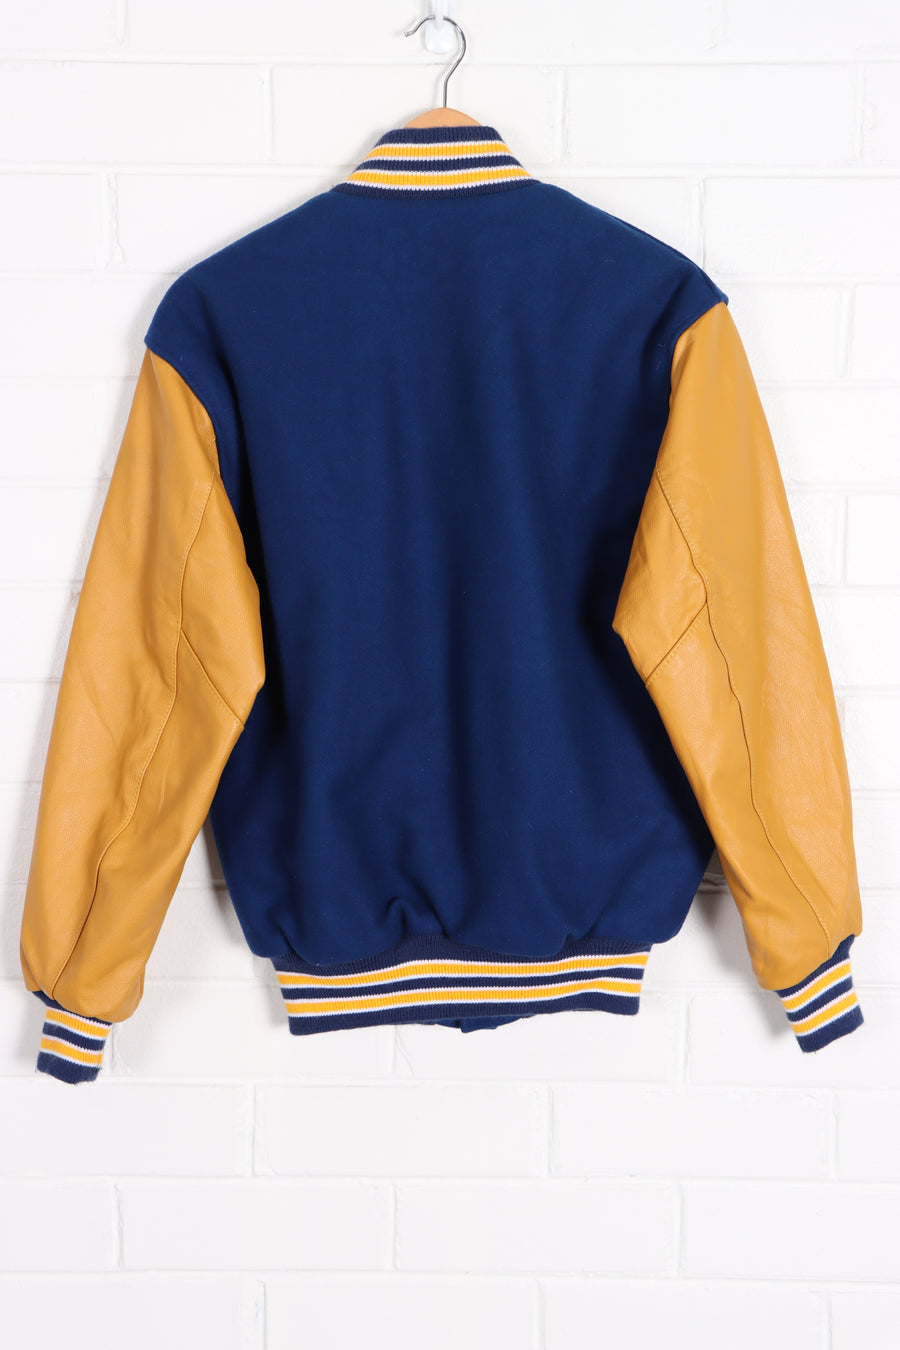 Blue & Gold Leather and Felt Varsity Bomber Jacket USA Made (S) - Vintage Sole Melbourne